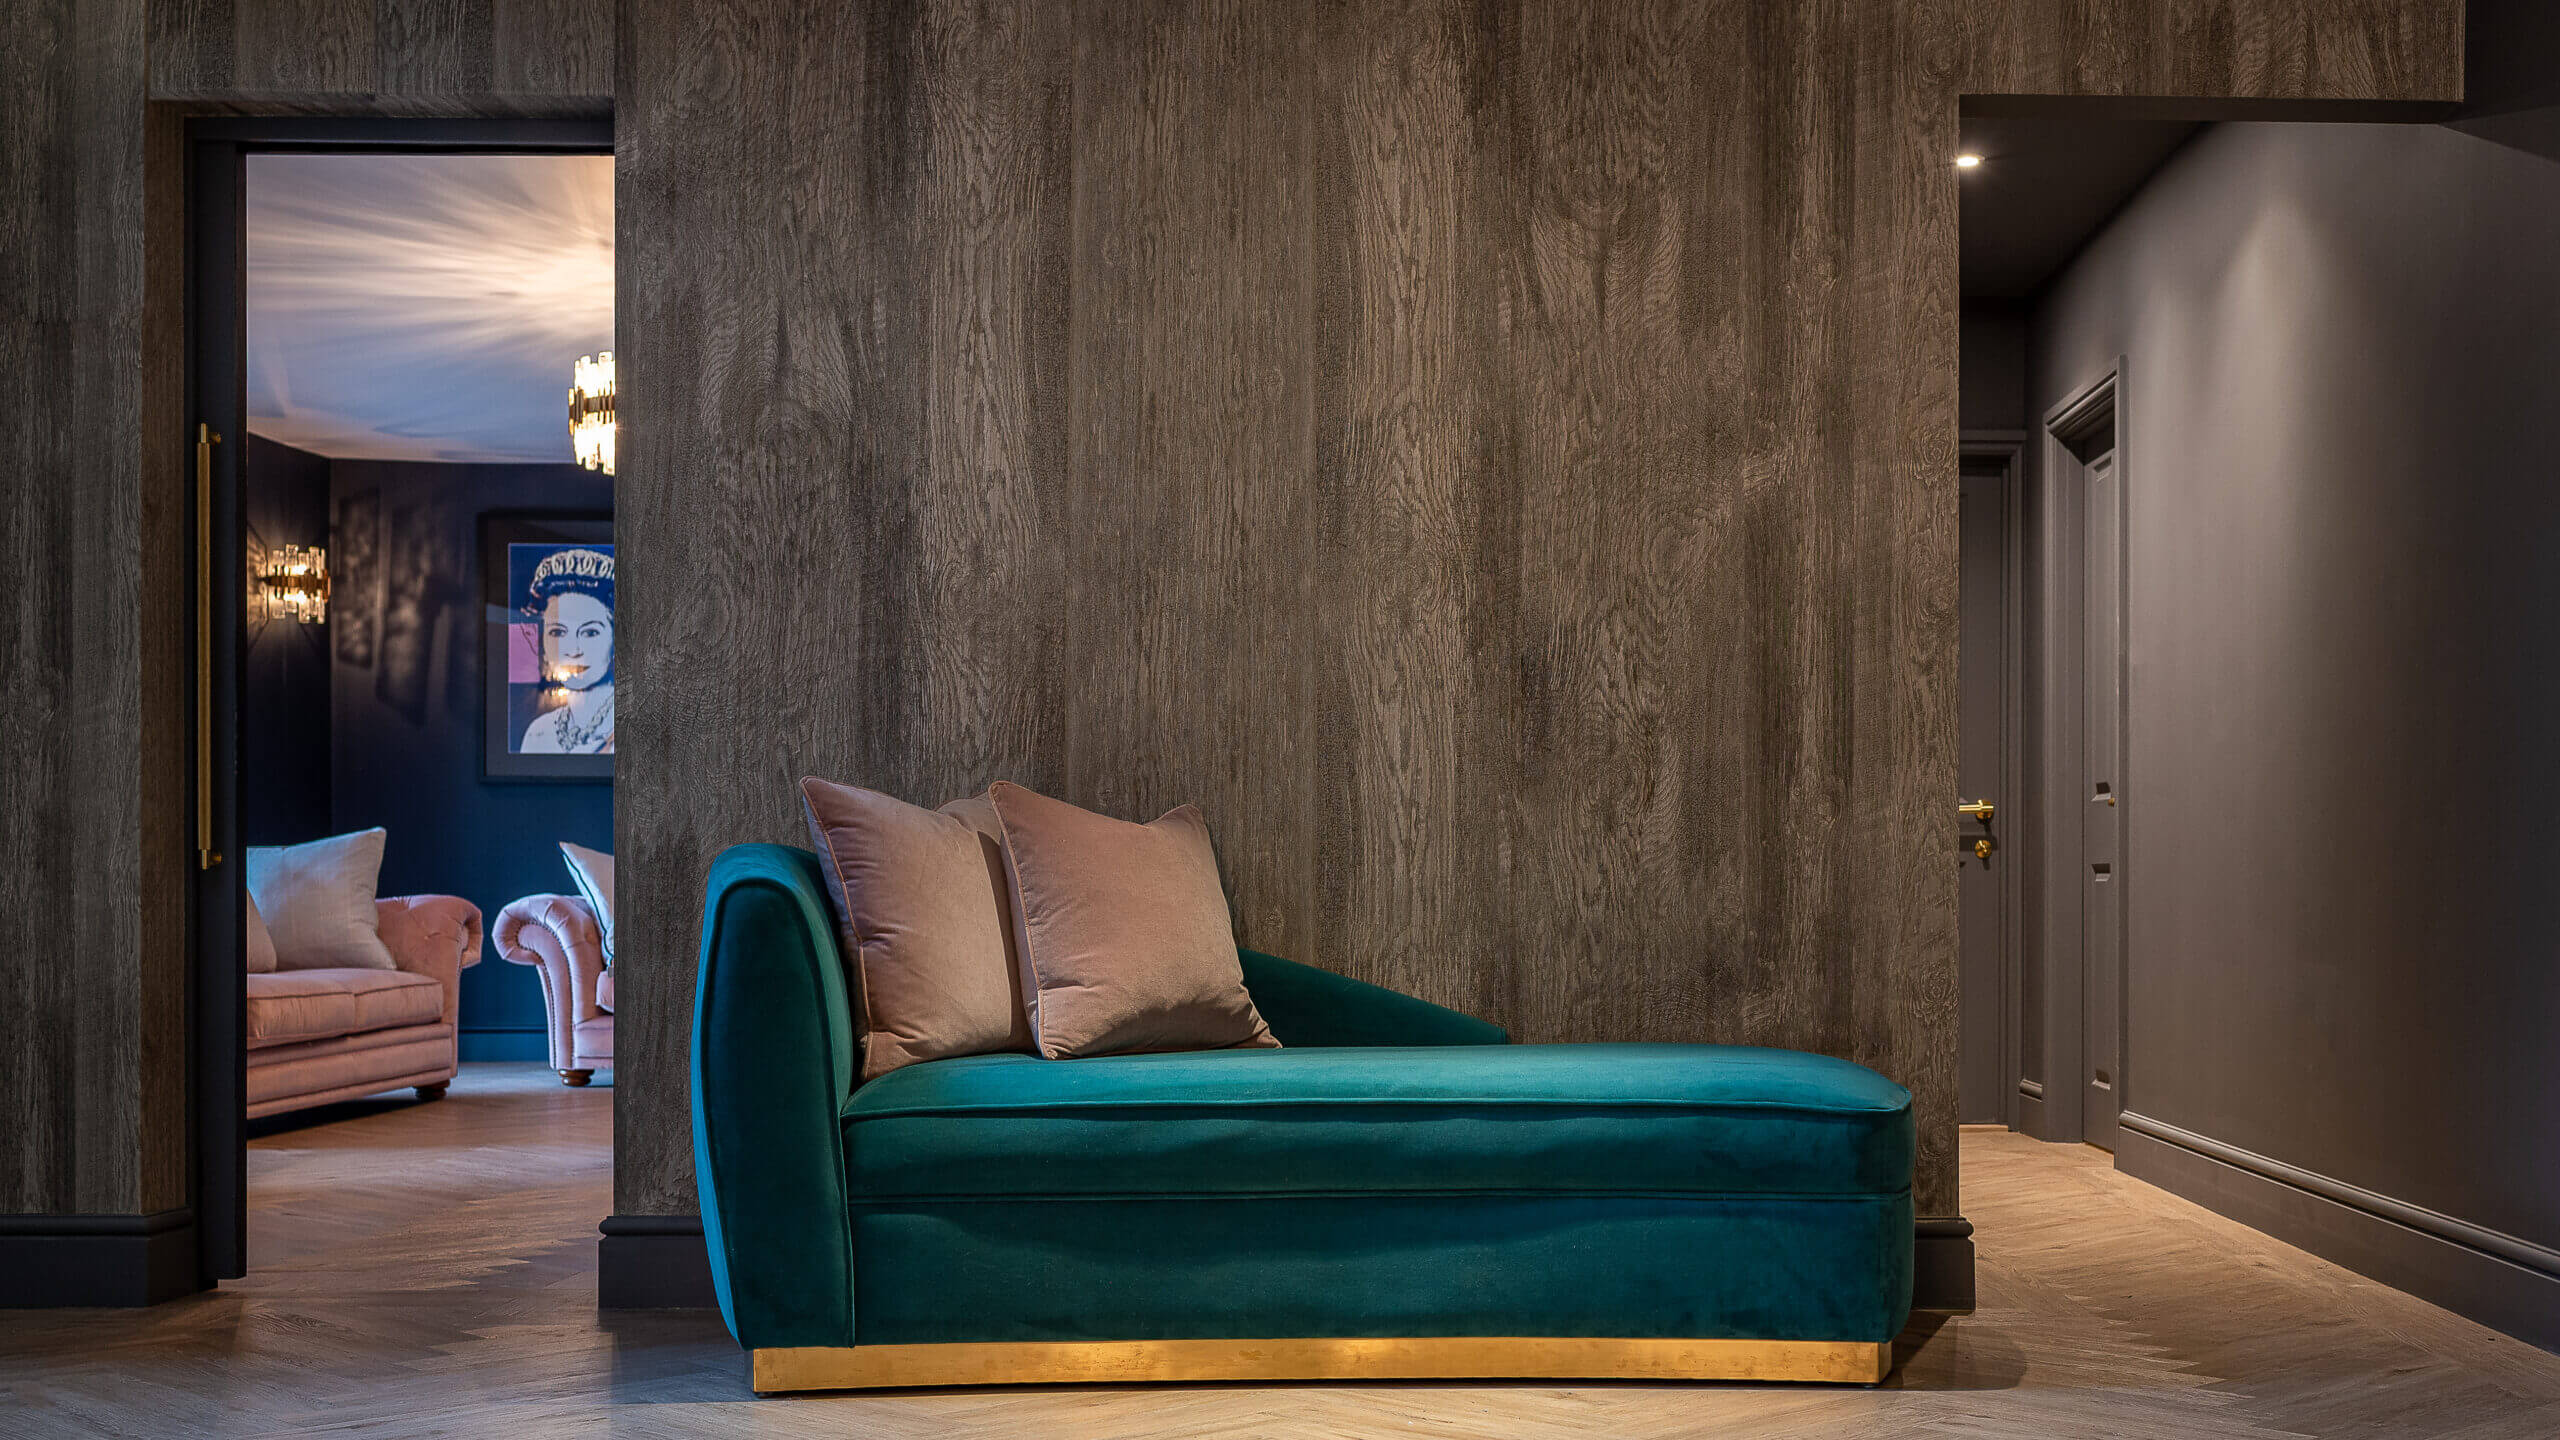 Residential Biophilic Design - Hallway with green sofa